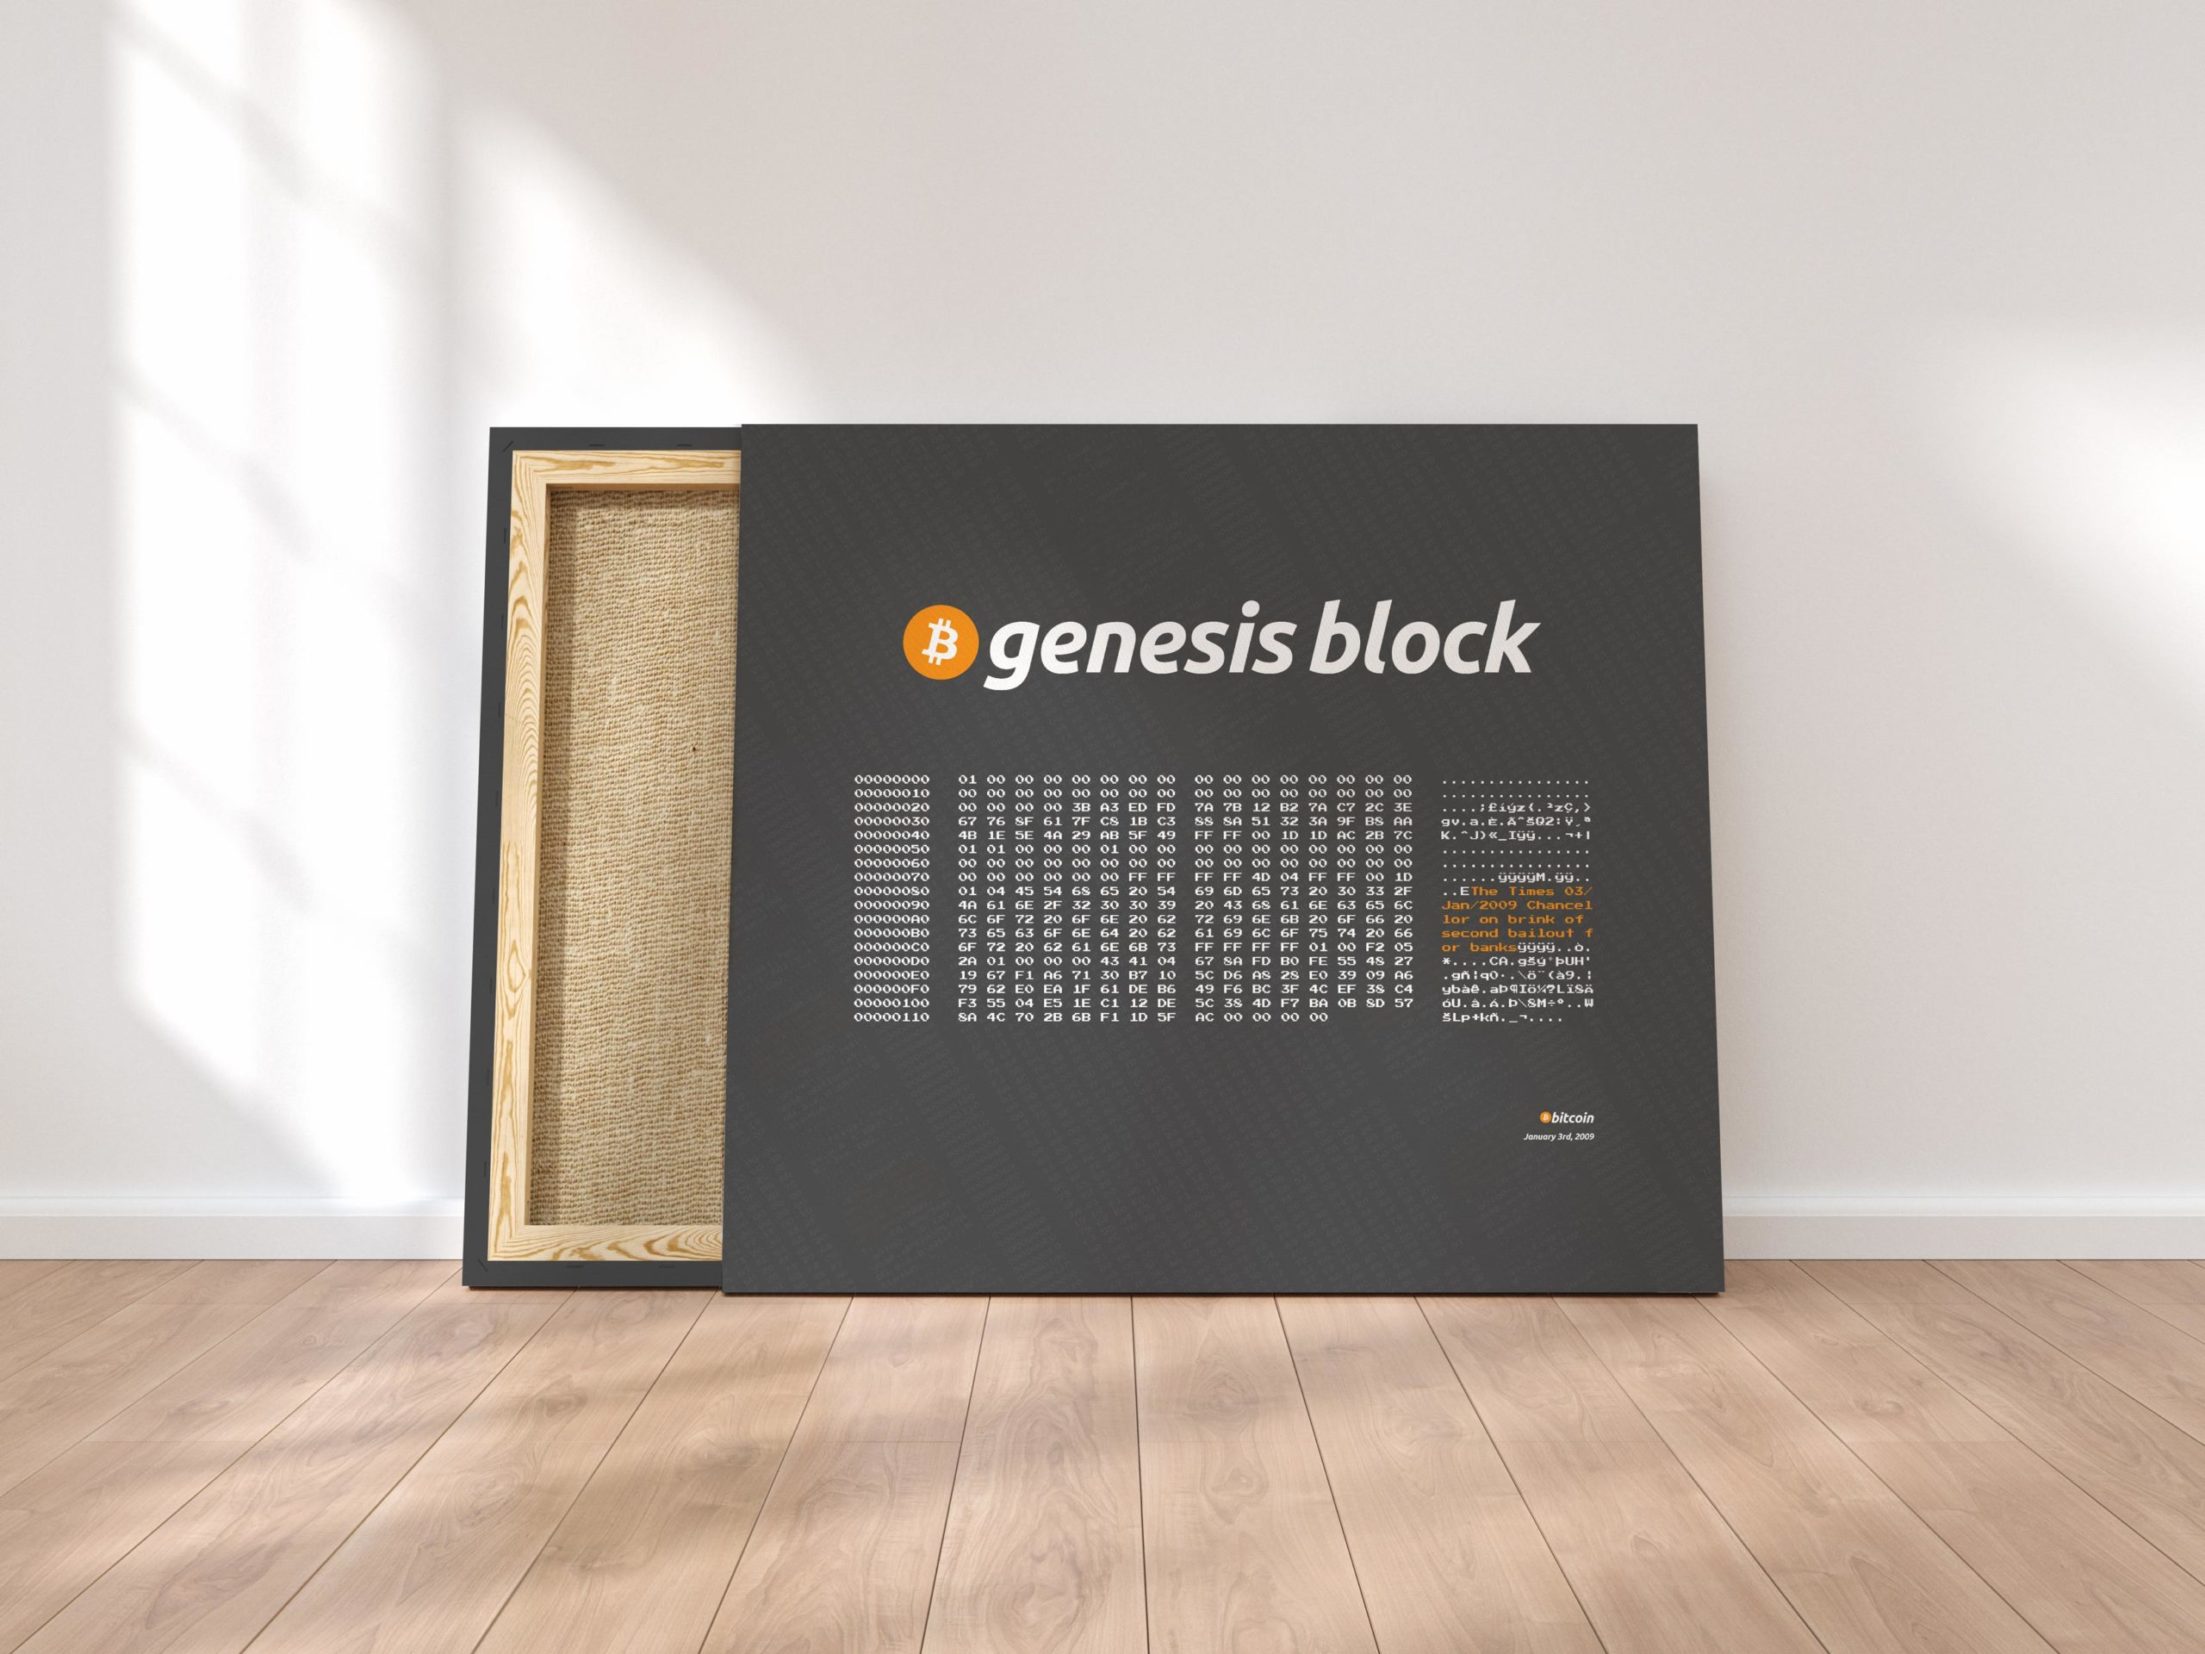 btc genesis block art canvas prints